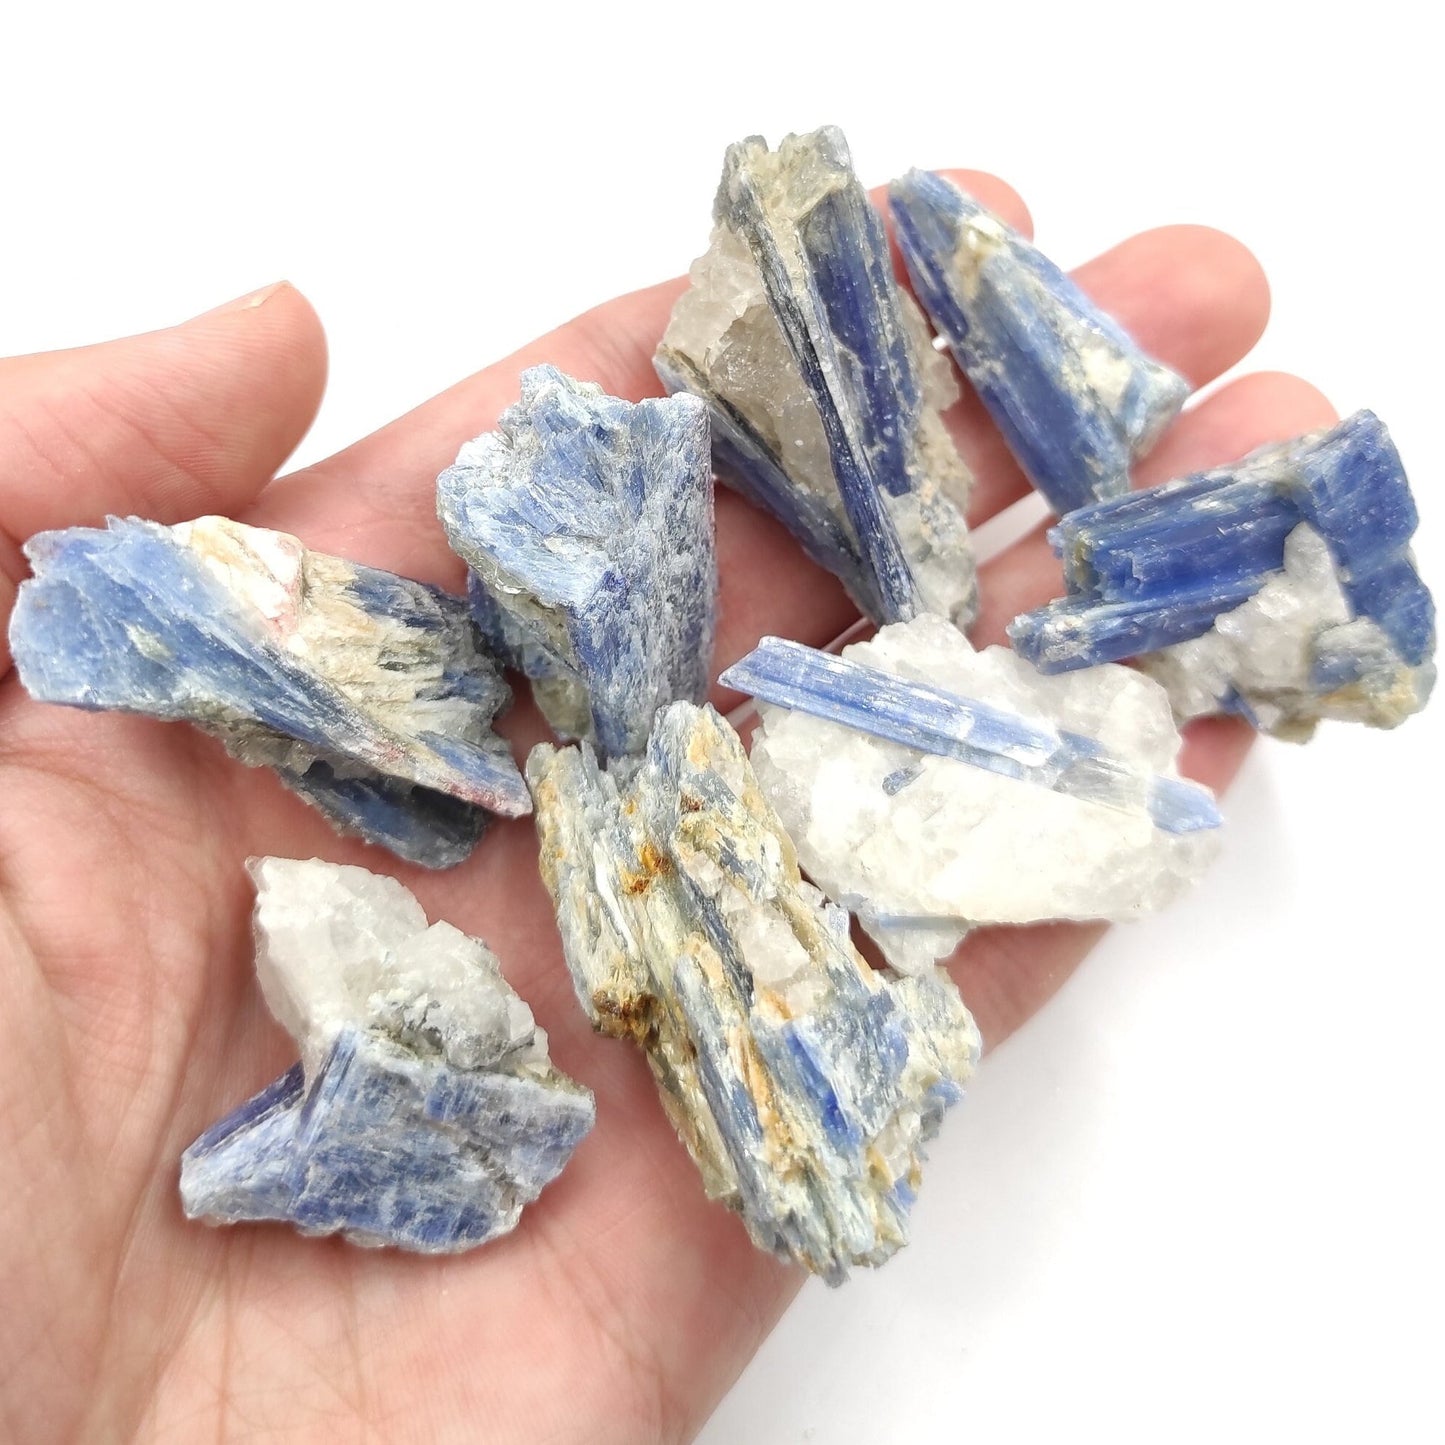 142g (8pcs) Lot of Kyanite with Quartz - Rio do Sul, Brazil - Natural Blue Kyanite Crystal Cluster - Rough Kyanite Crystal - Raw Kyanite